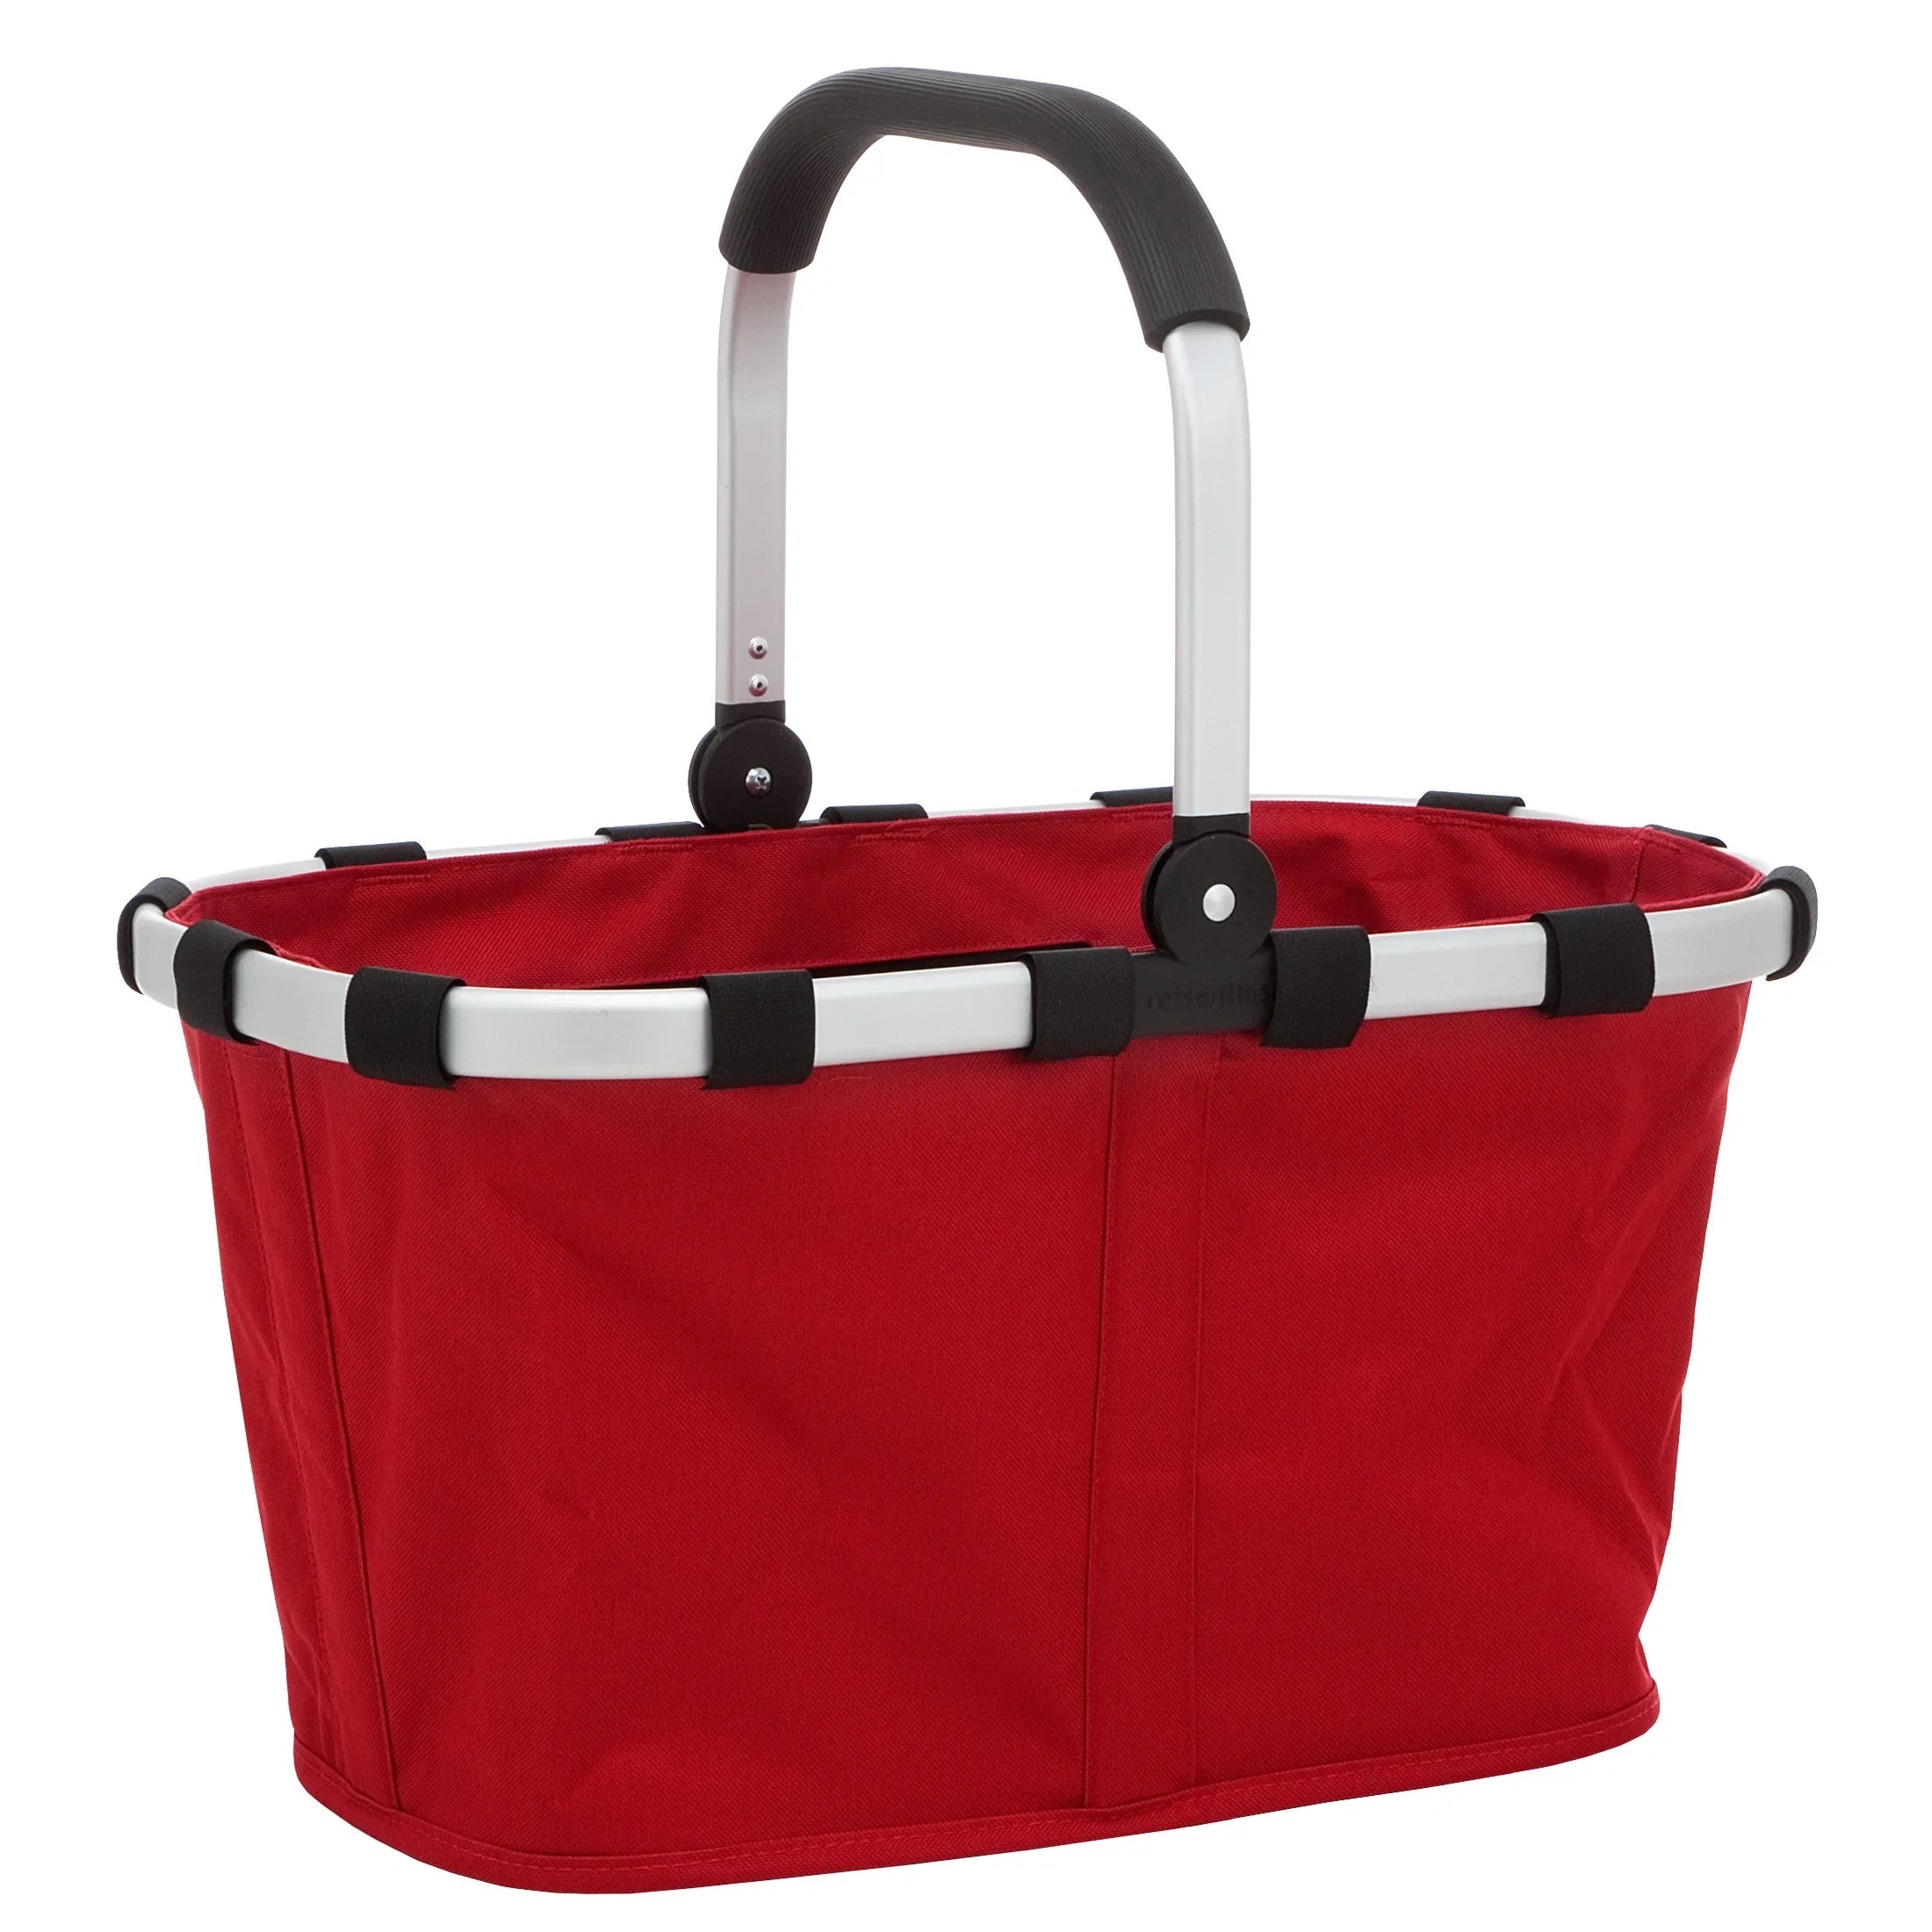 Reisenthel Shopping Carrybag shopping basket 48 cm - red